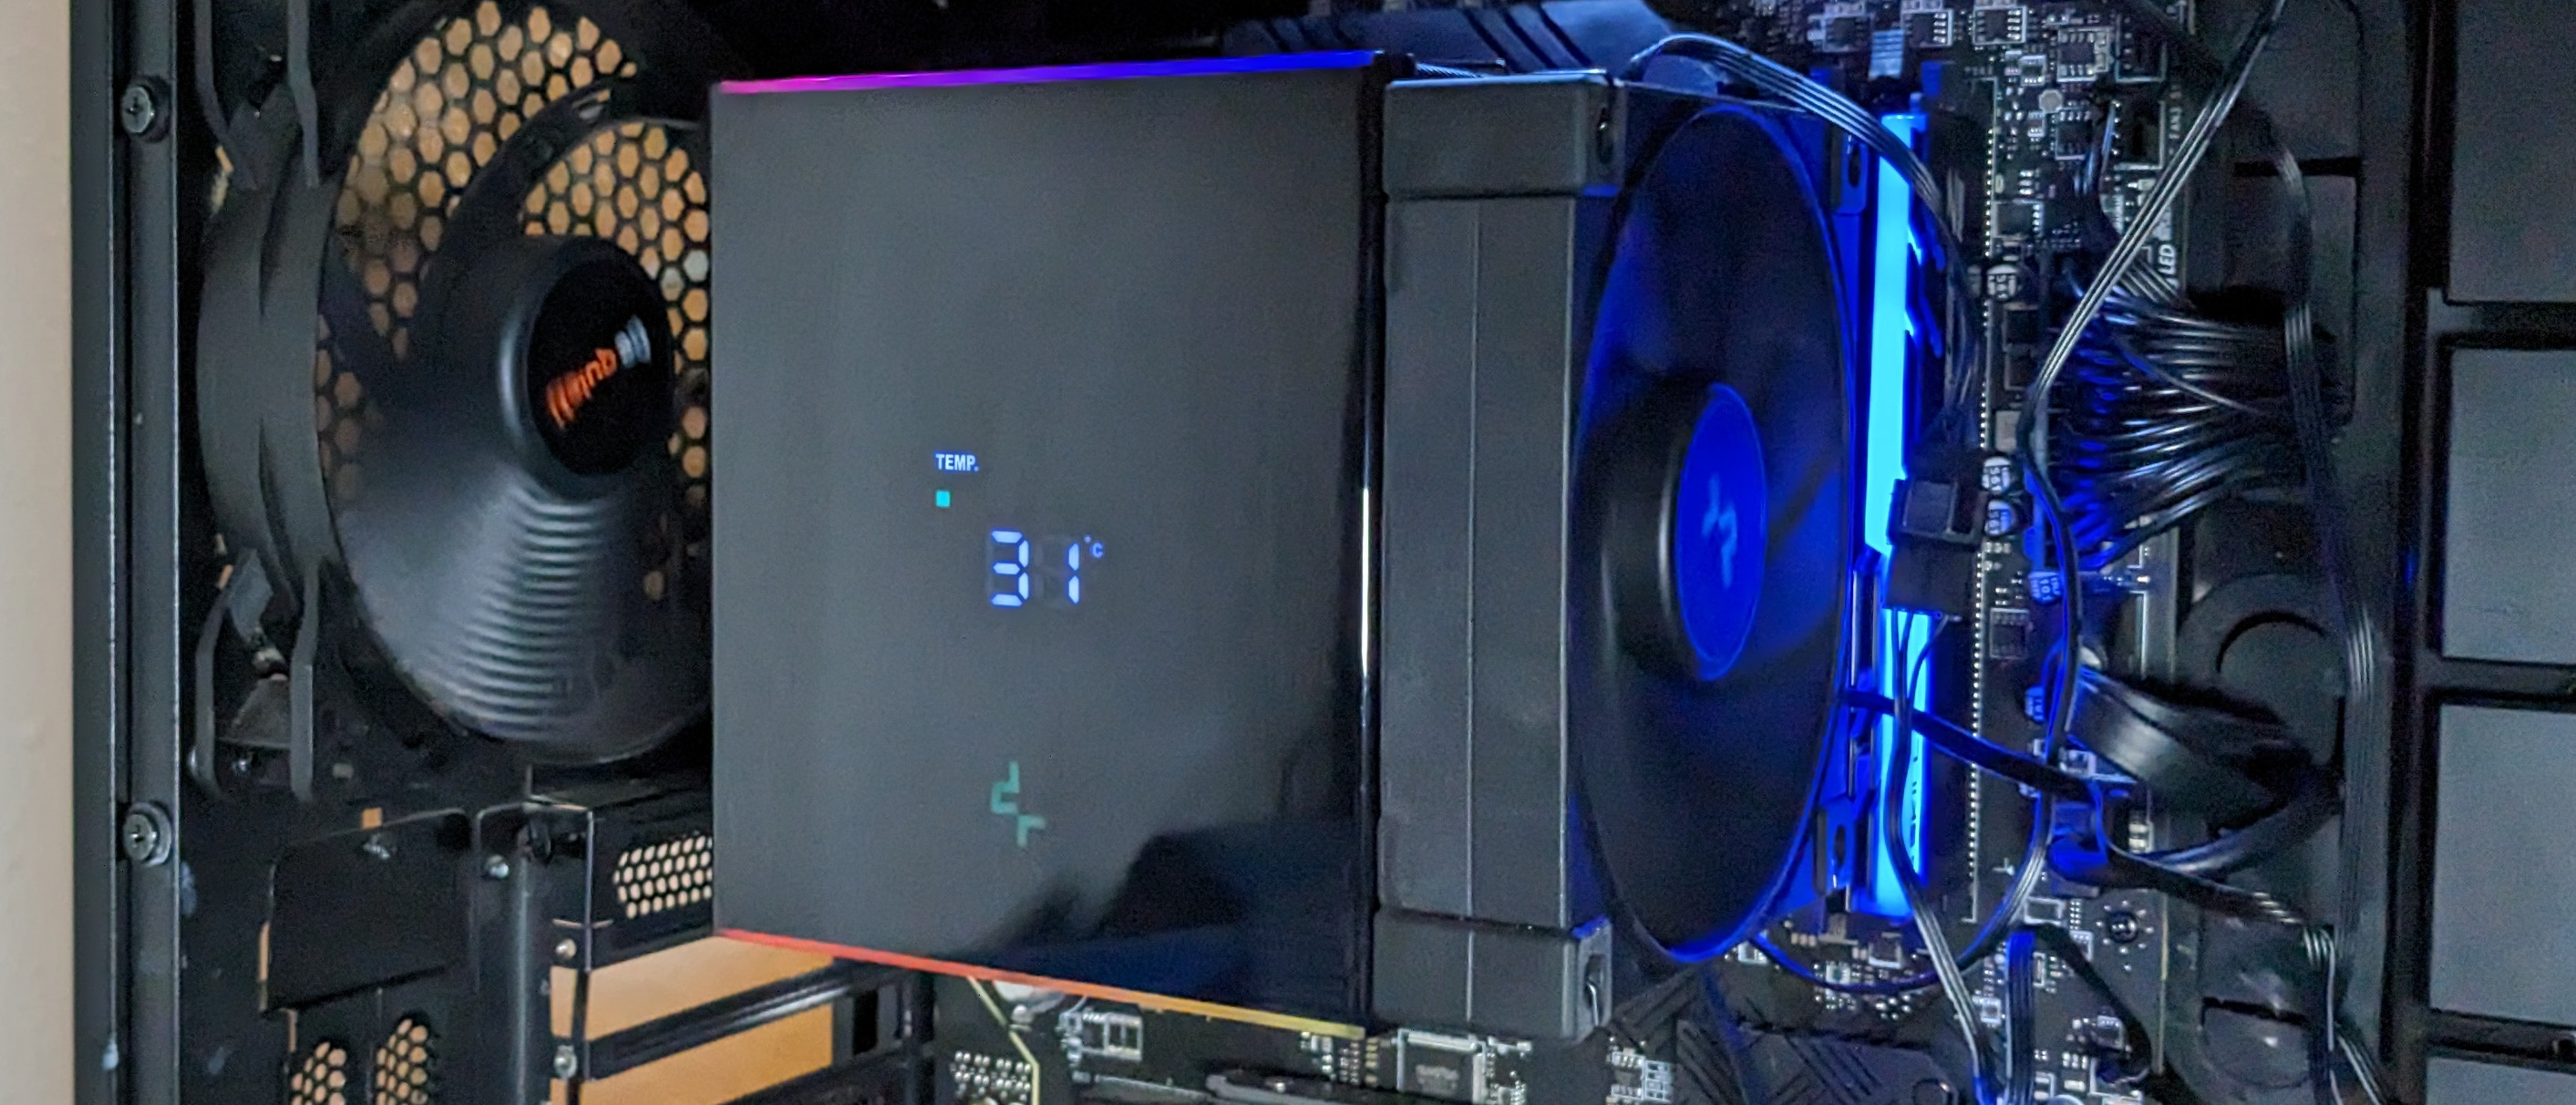 Mega Size Air Cooler: Deepcool Assassin IV CPU Cooler Review & Benchmarks 